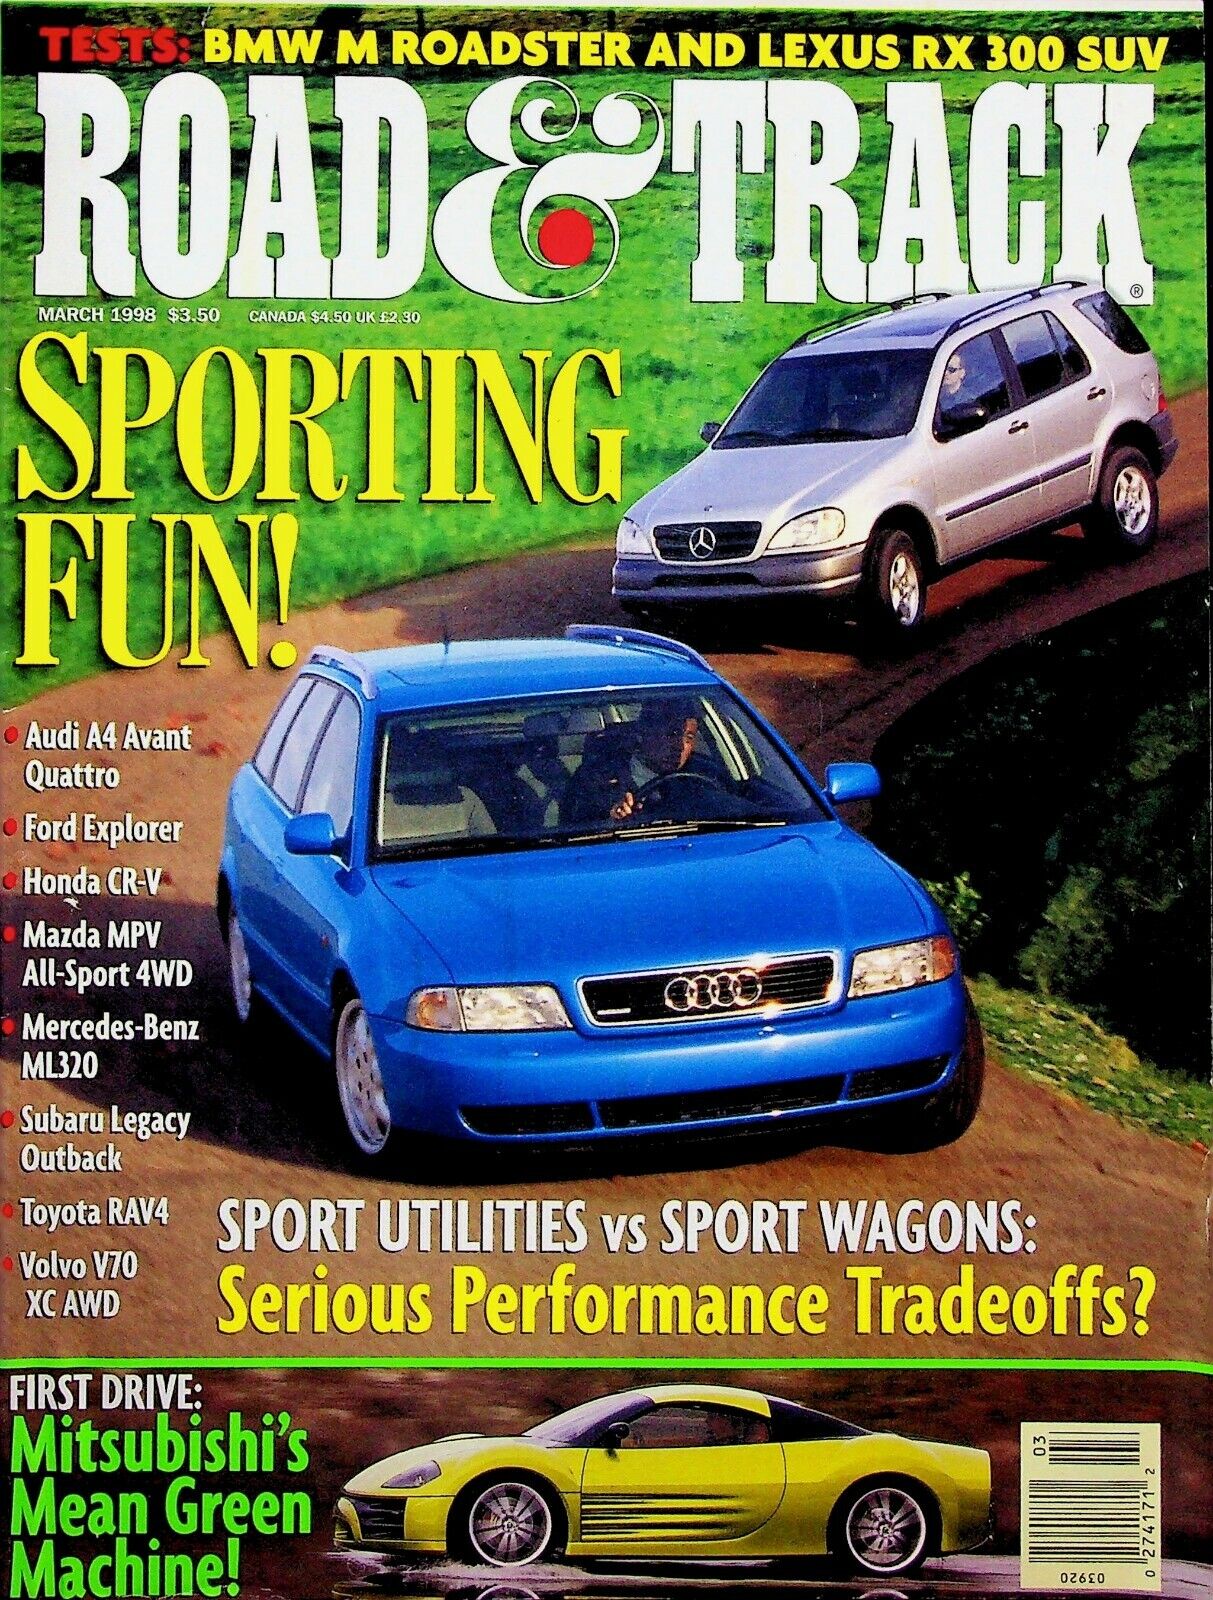 SPORTING FUN - ROAD & TRACK MAGAZINE, 1998 MARCH  VTG.